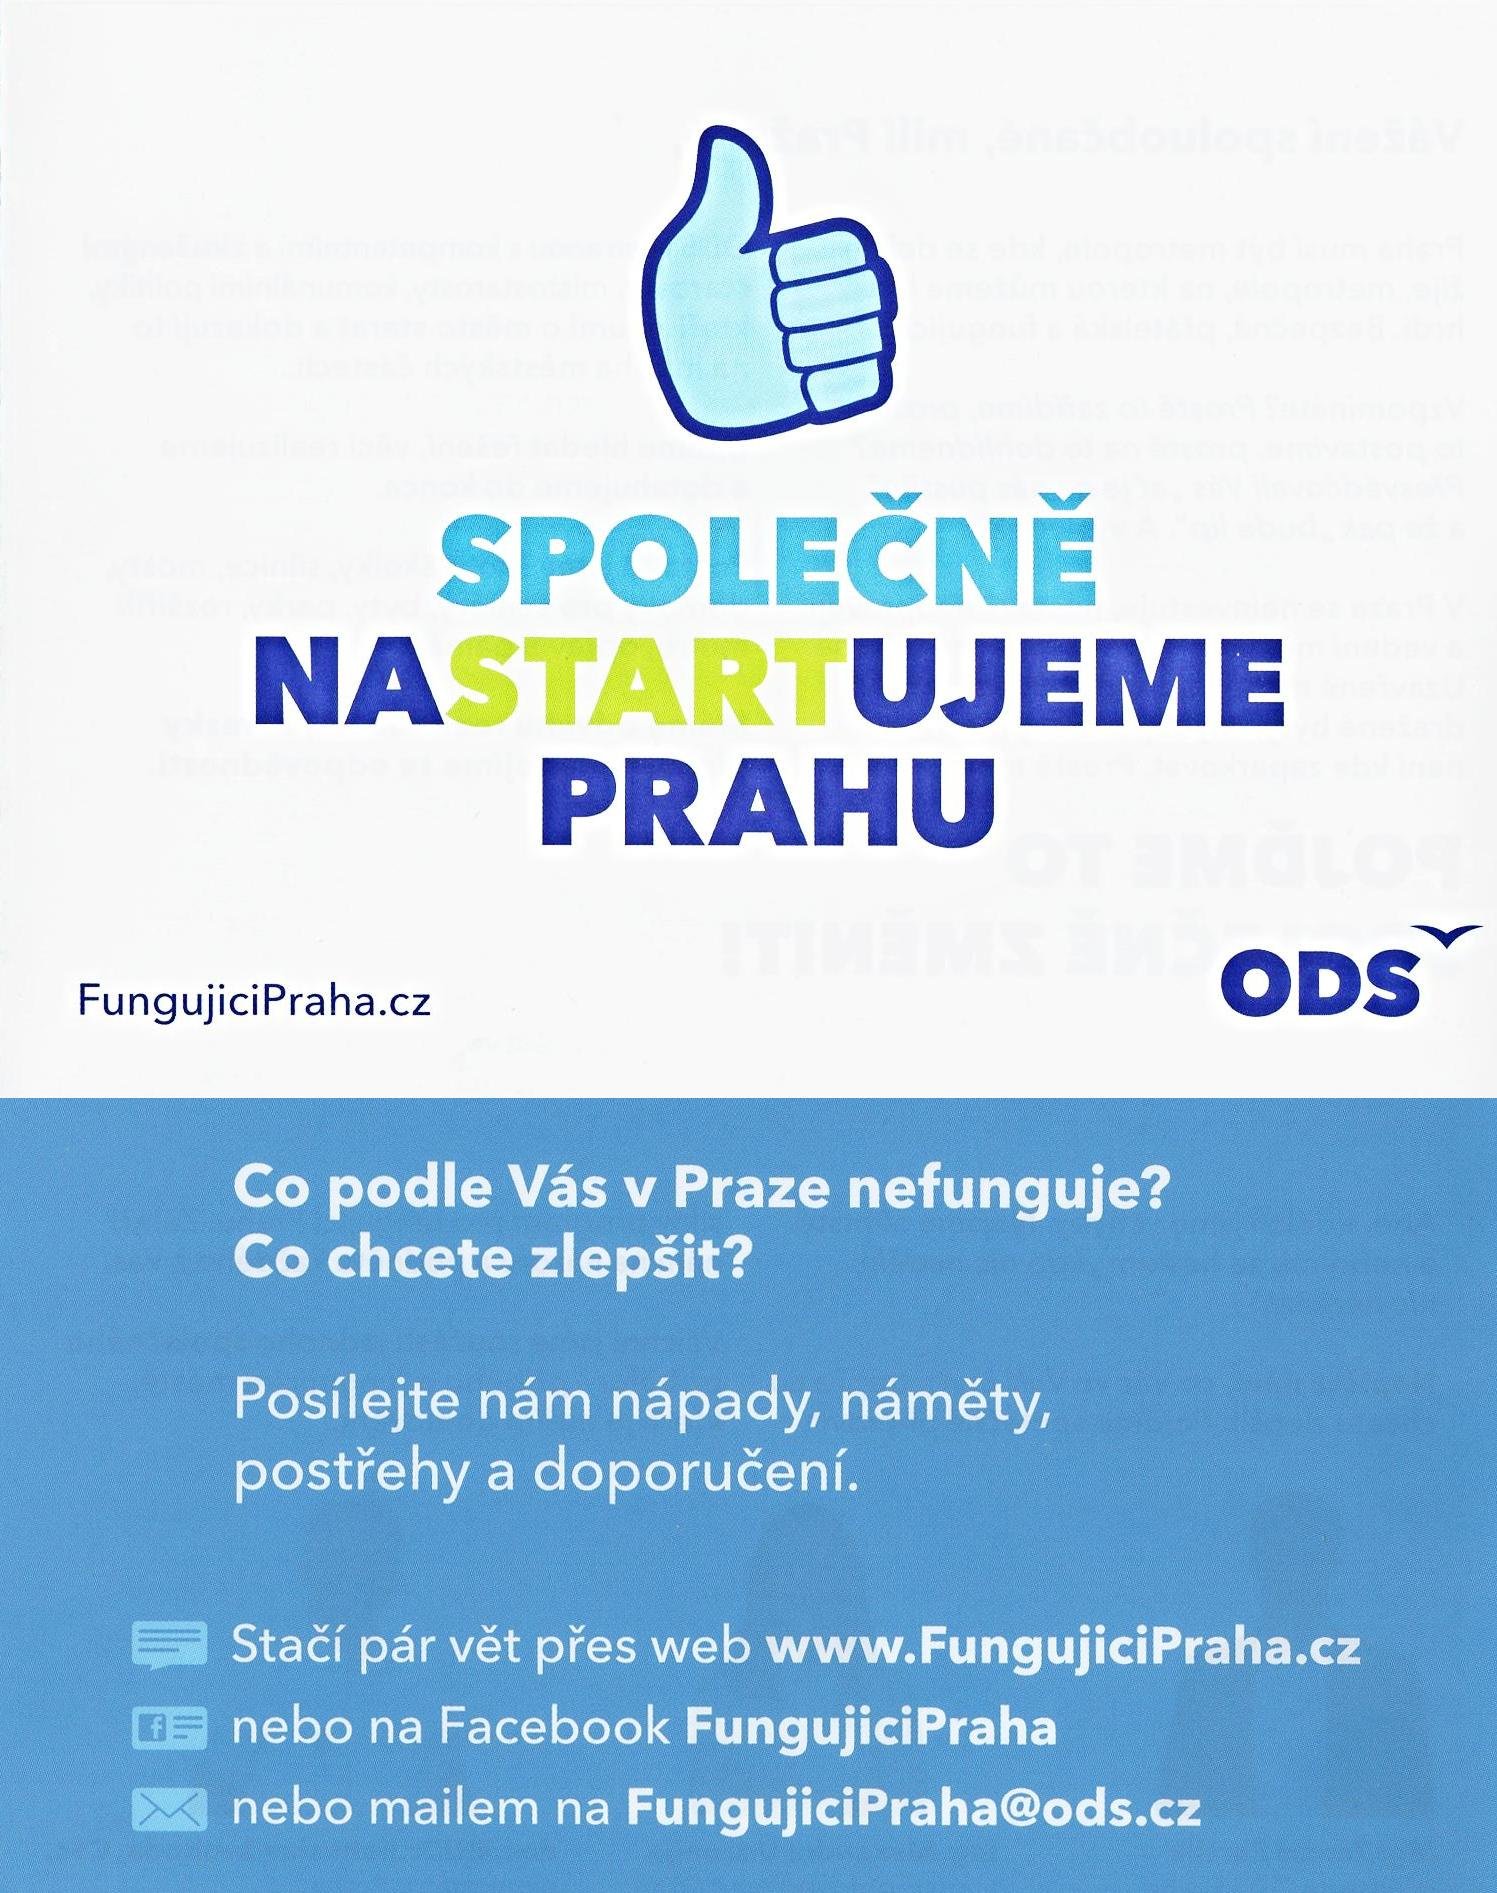 ODS Praha 14: Společně nastarujeme Prahu